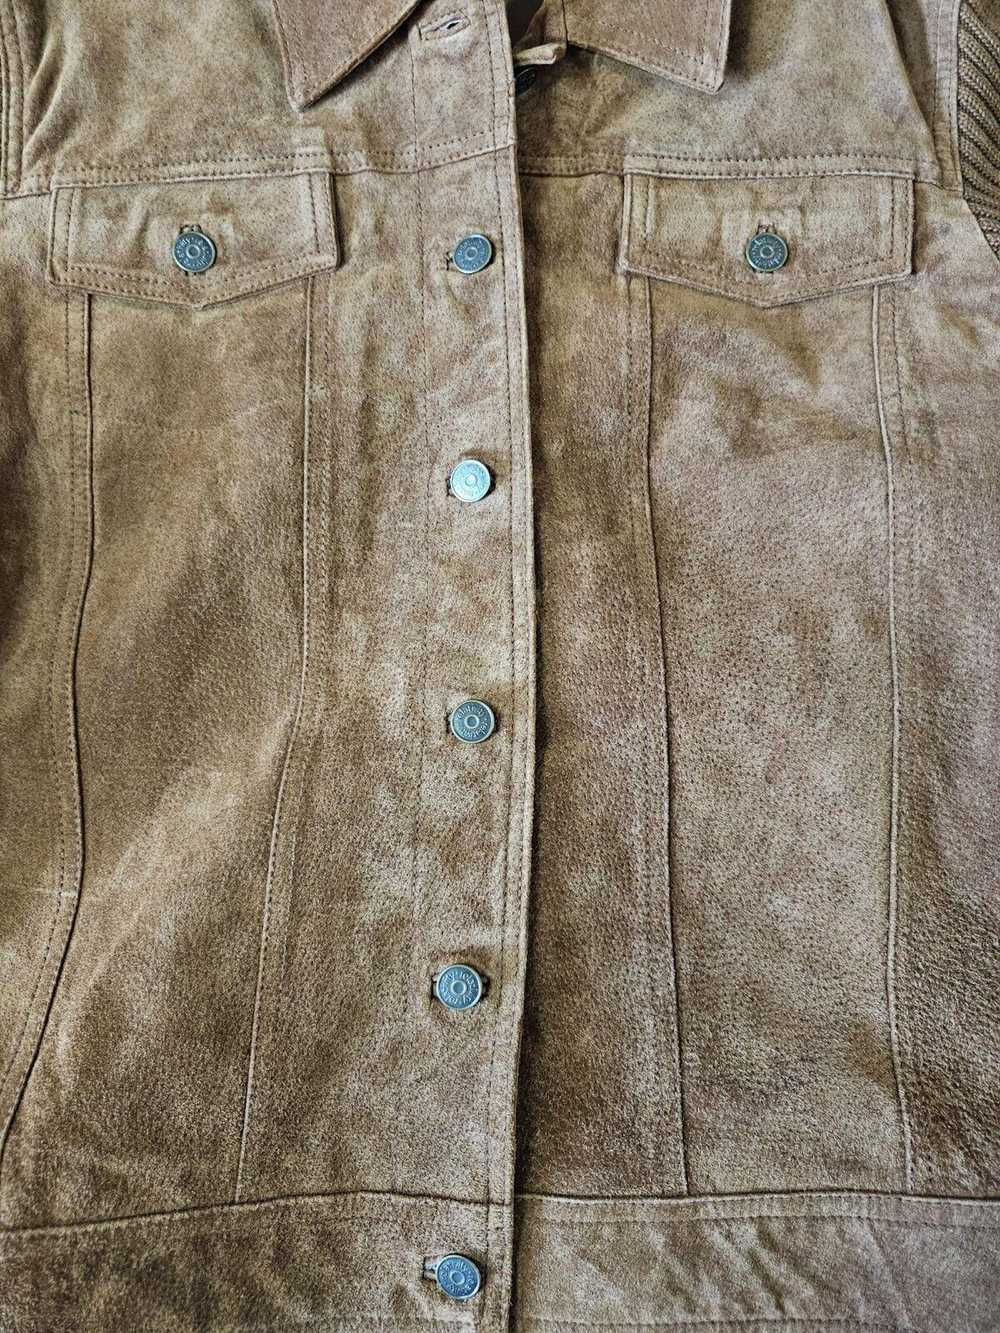 Designer Relativity 100% Genuine Leather Jacket L… - image 2